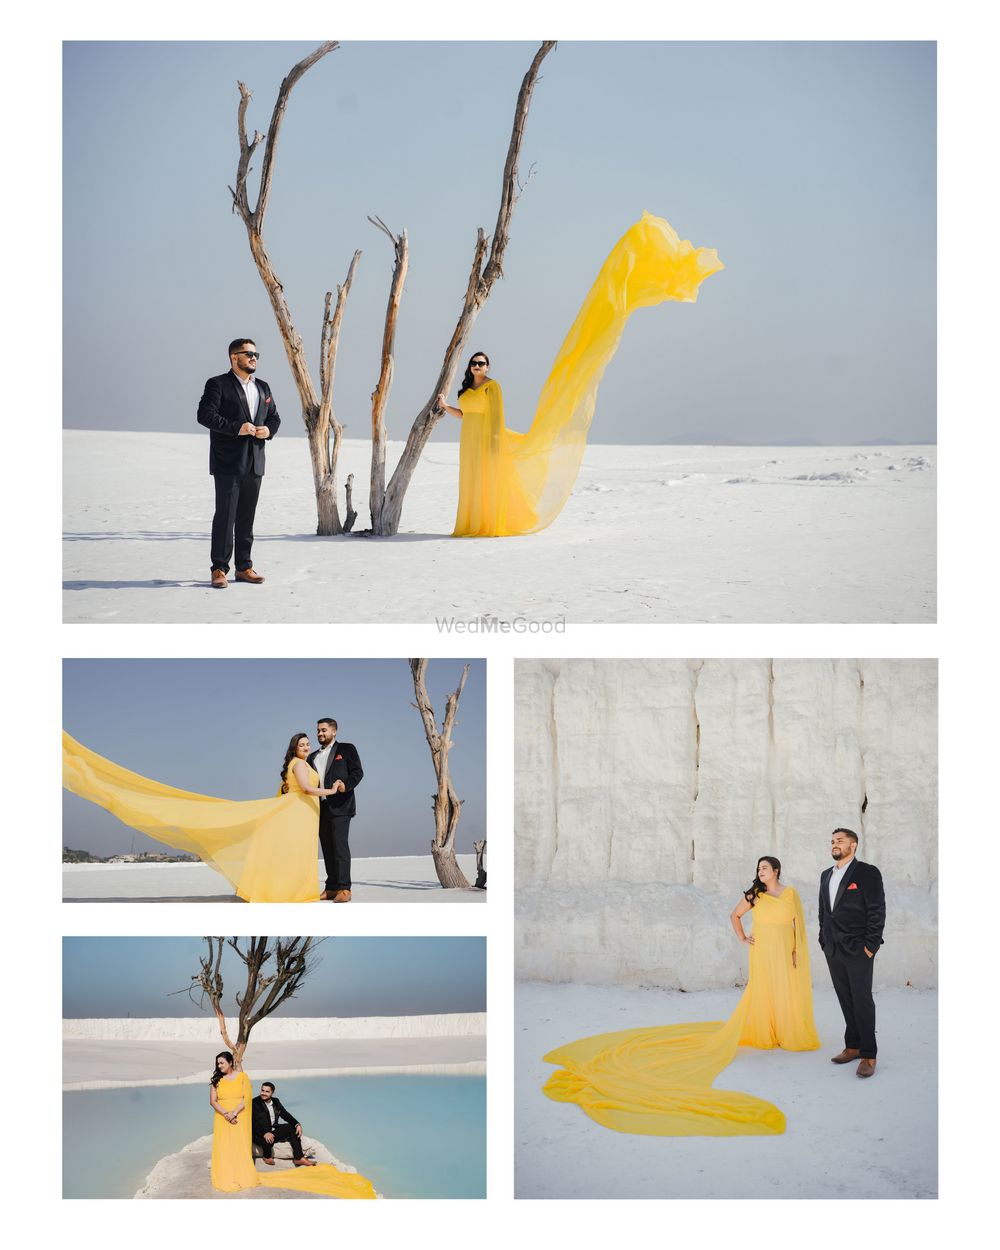 Photo By Memory Ocean Photography - Pre Wedding - Pre Wedding Photographers